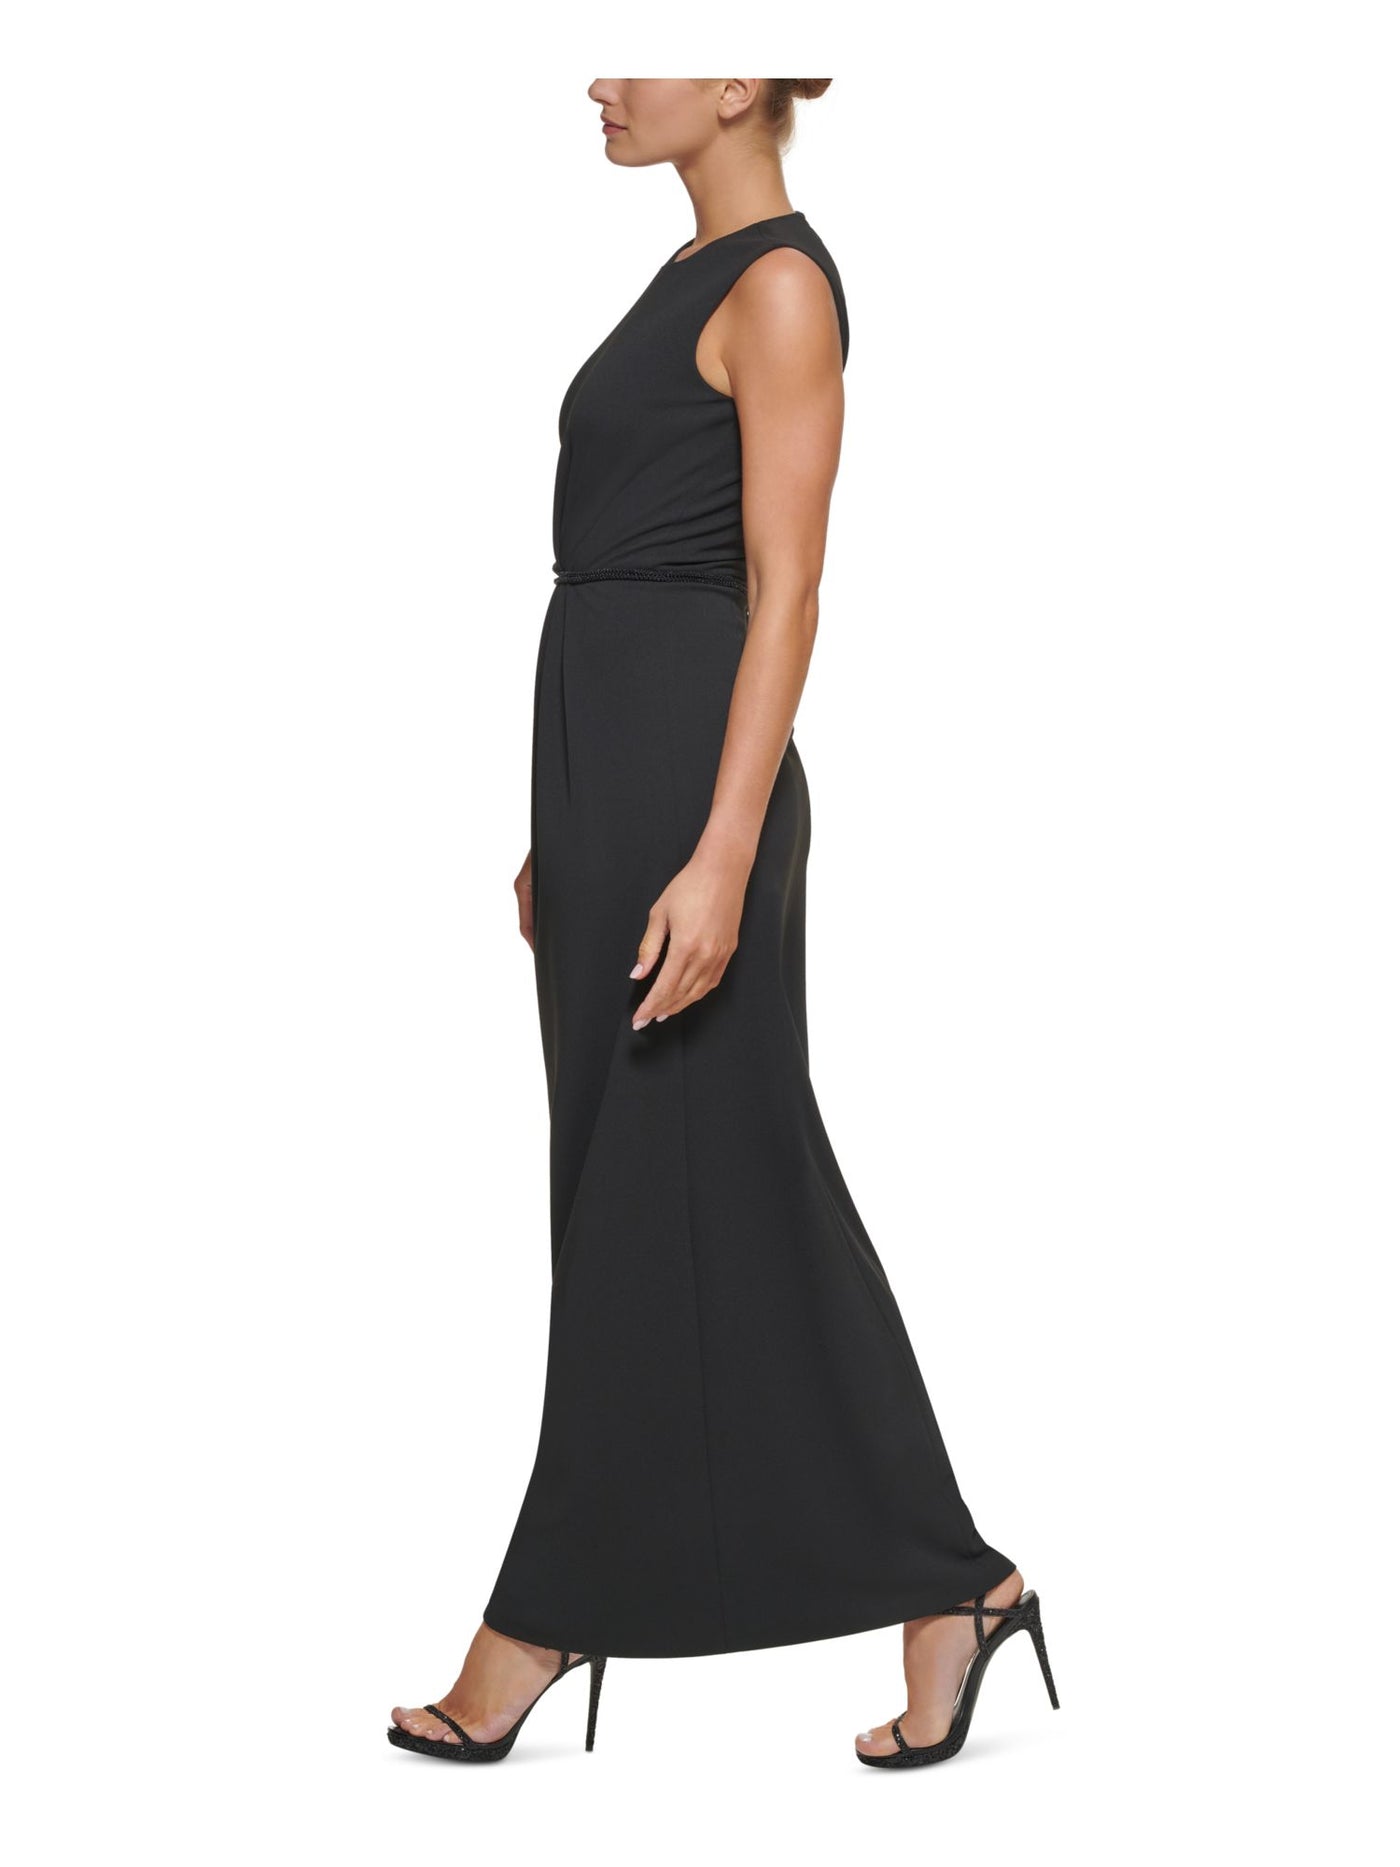 DKNY Womens Black Stretch Beaded Zippered Back Slit Lined Sleeveless Round Neck Full-Length Formal Gown Dress 16